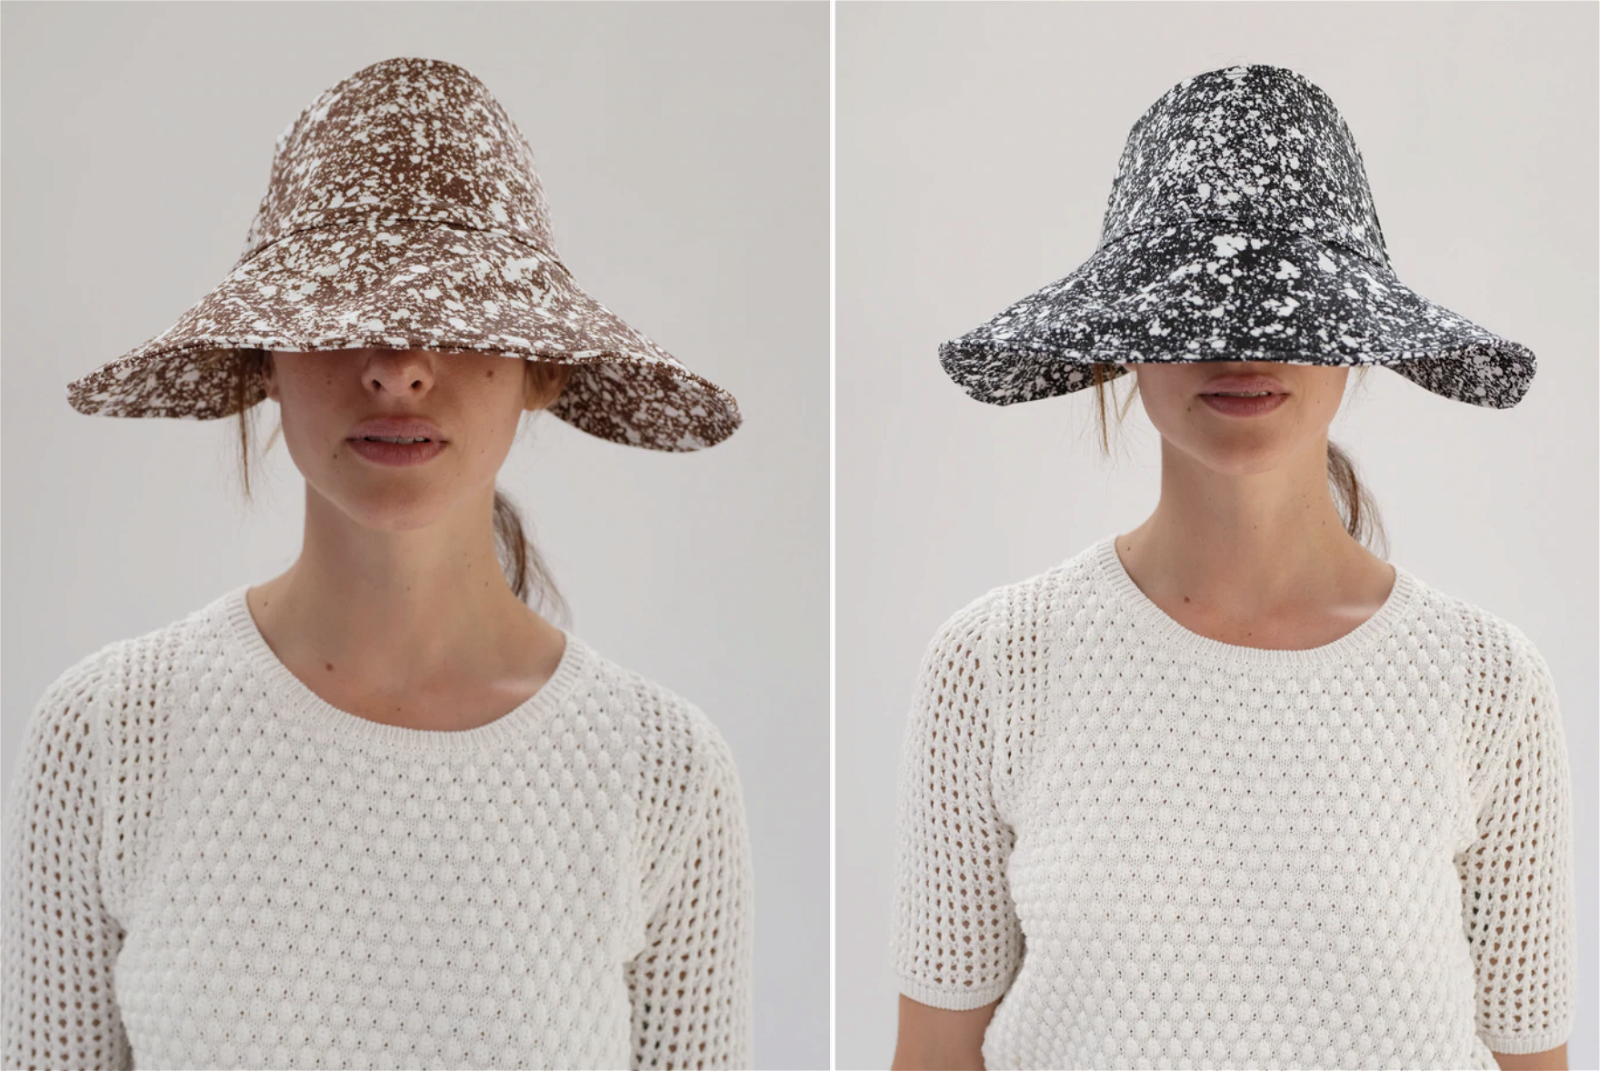 Beklilna Summer Hats, Oh there's so many!